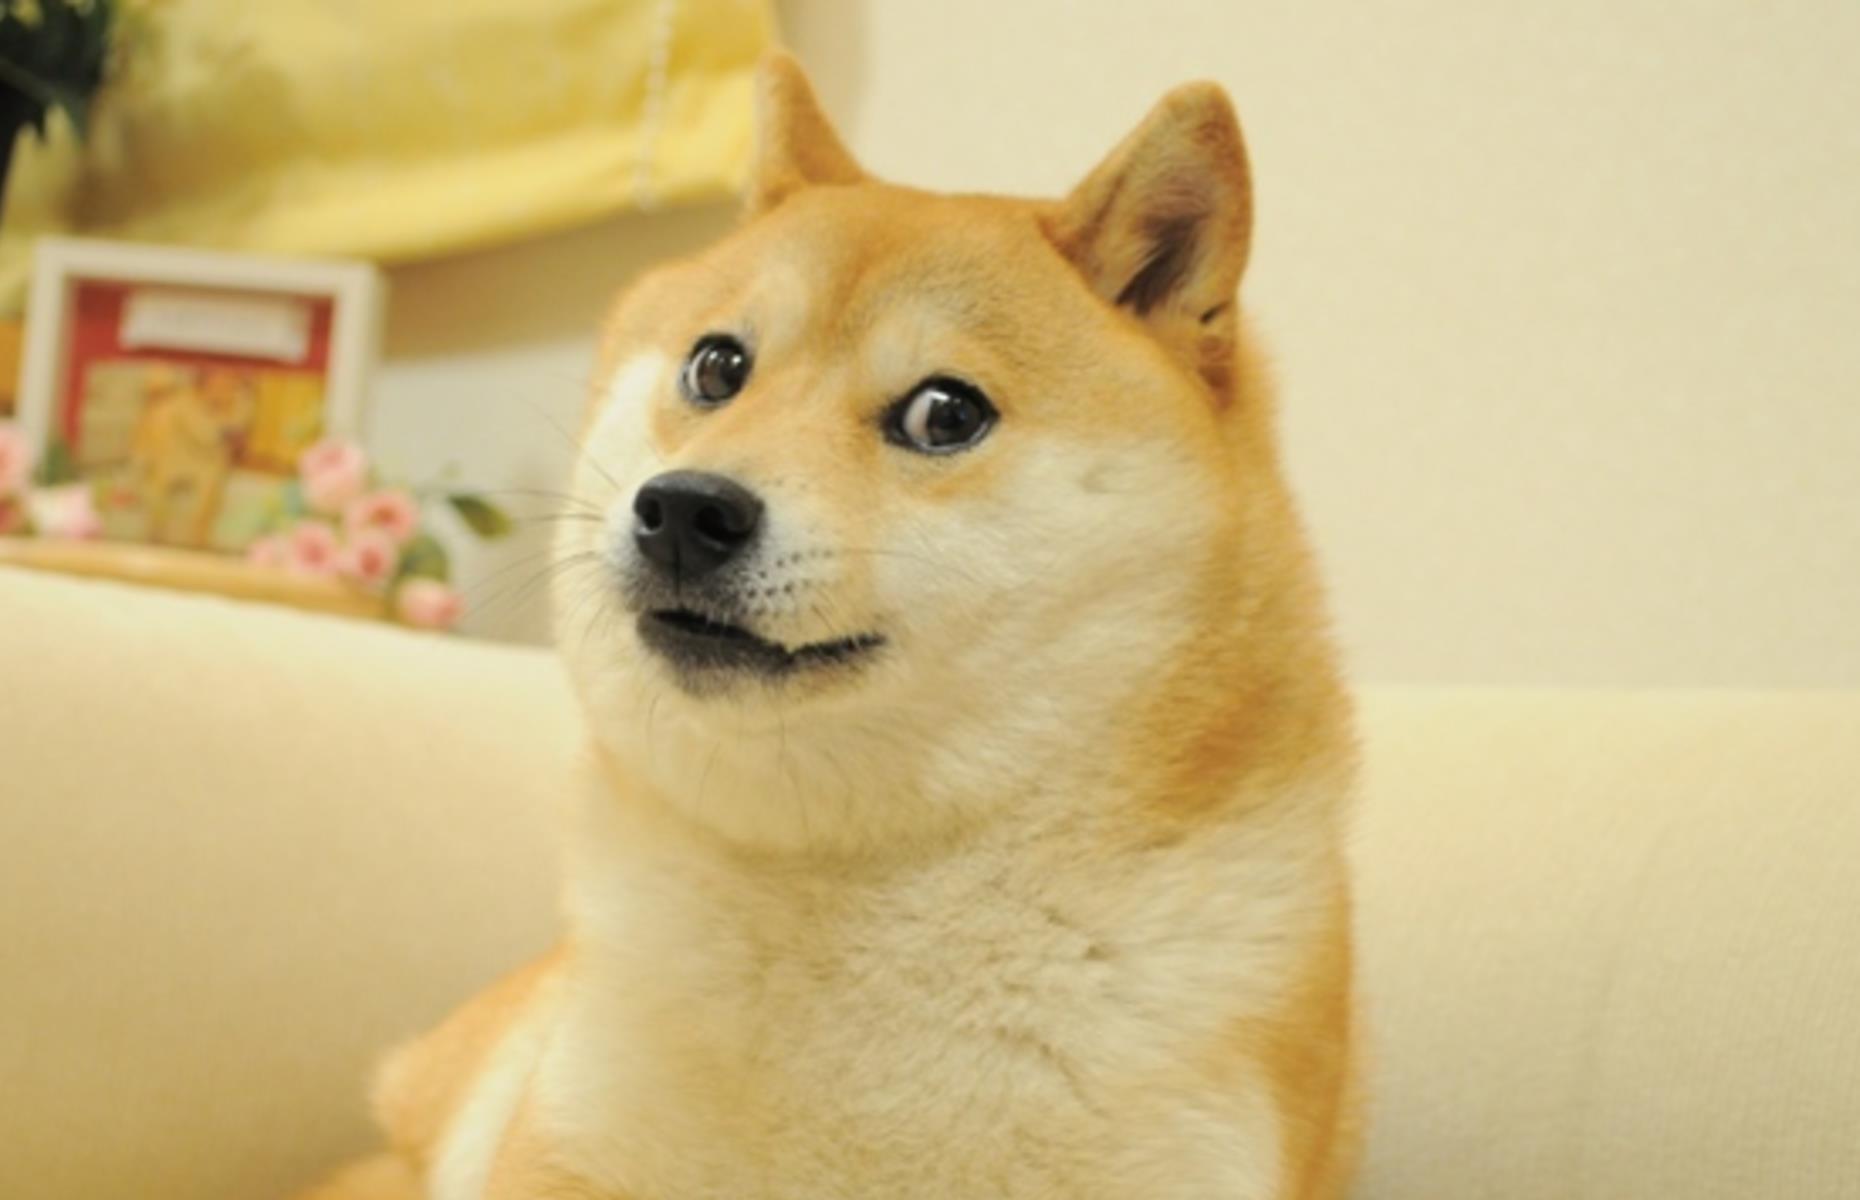 Doge meme NFT: $4 million (£3m)